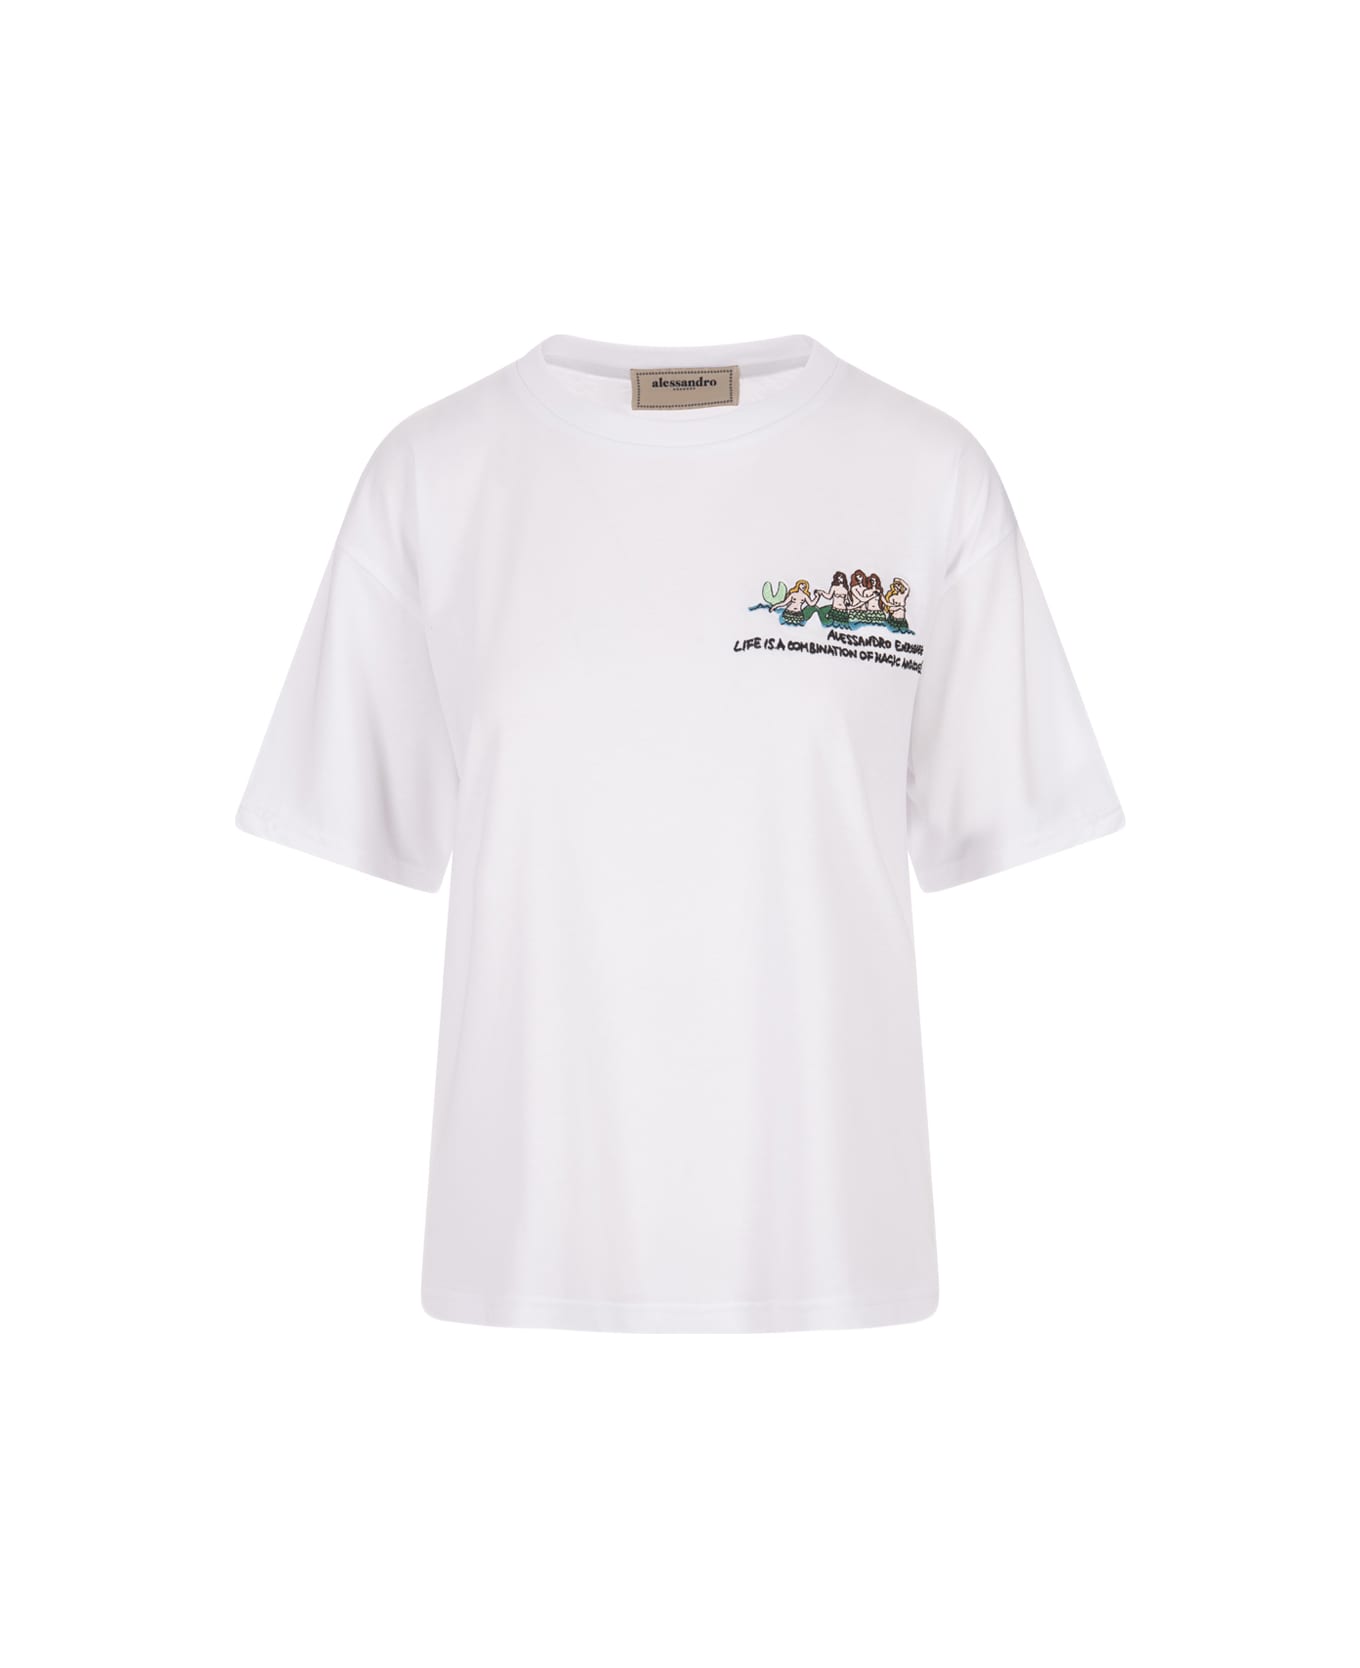 Alessandro Enriquez White T-shirt With Mermaid Embroidery - White